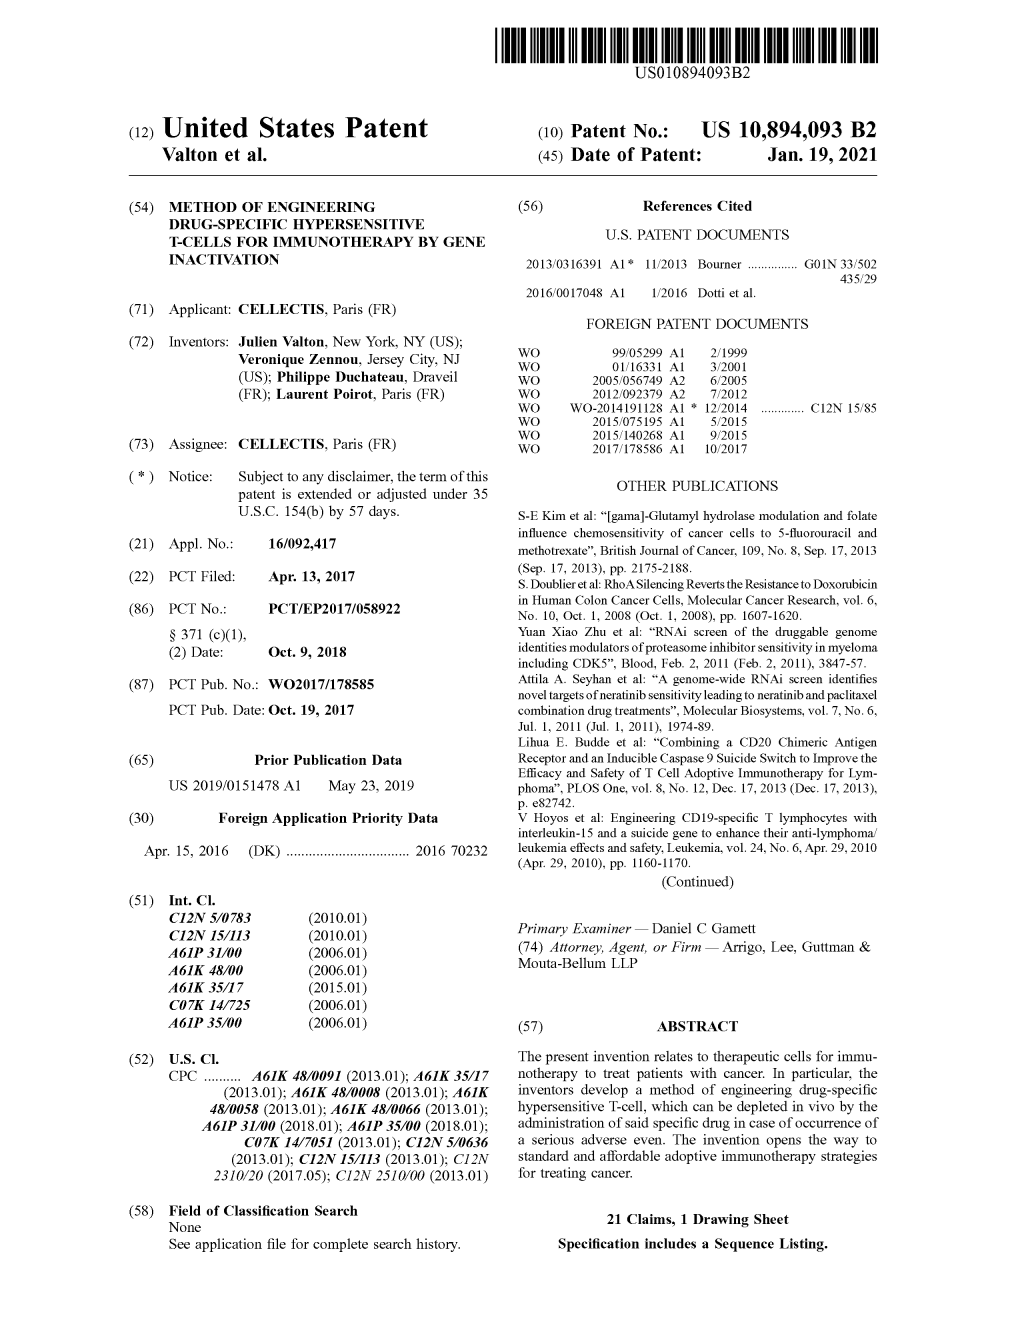 ( 12 ) United States Patent ( 10) Patent No .: US 10,894,093 B2 Valton Et Al